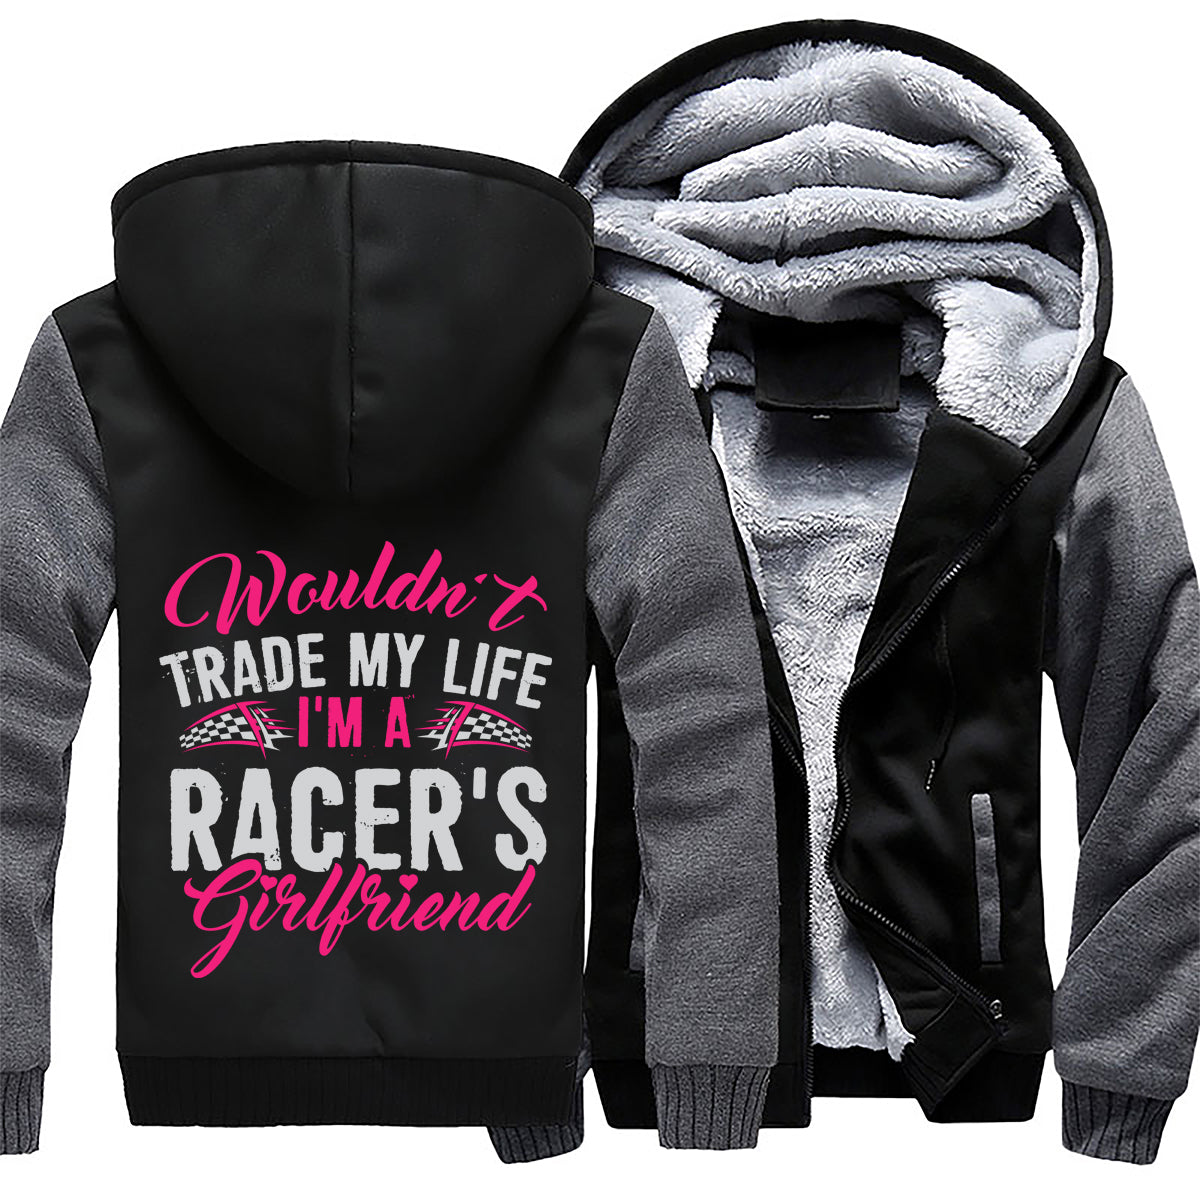 I'm A Racer's Girlfriend Jacket 